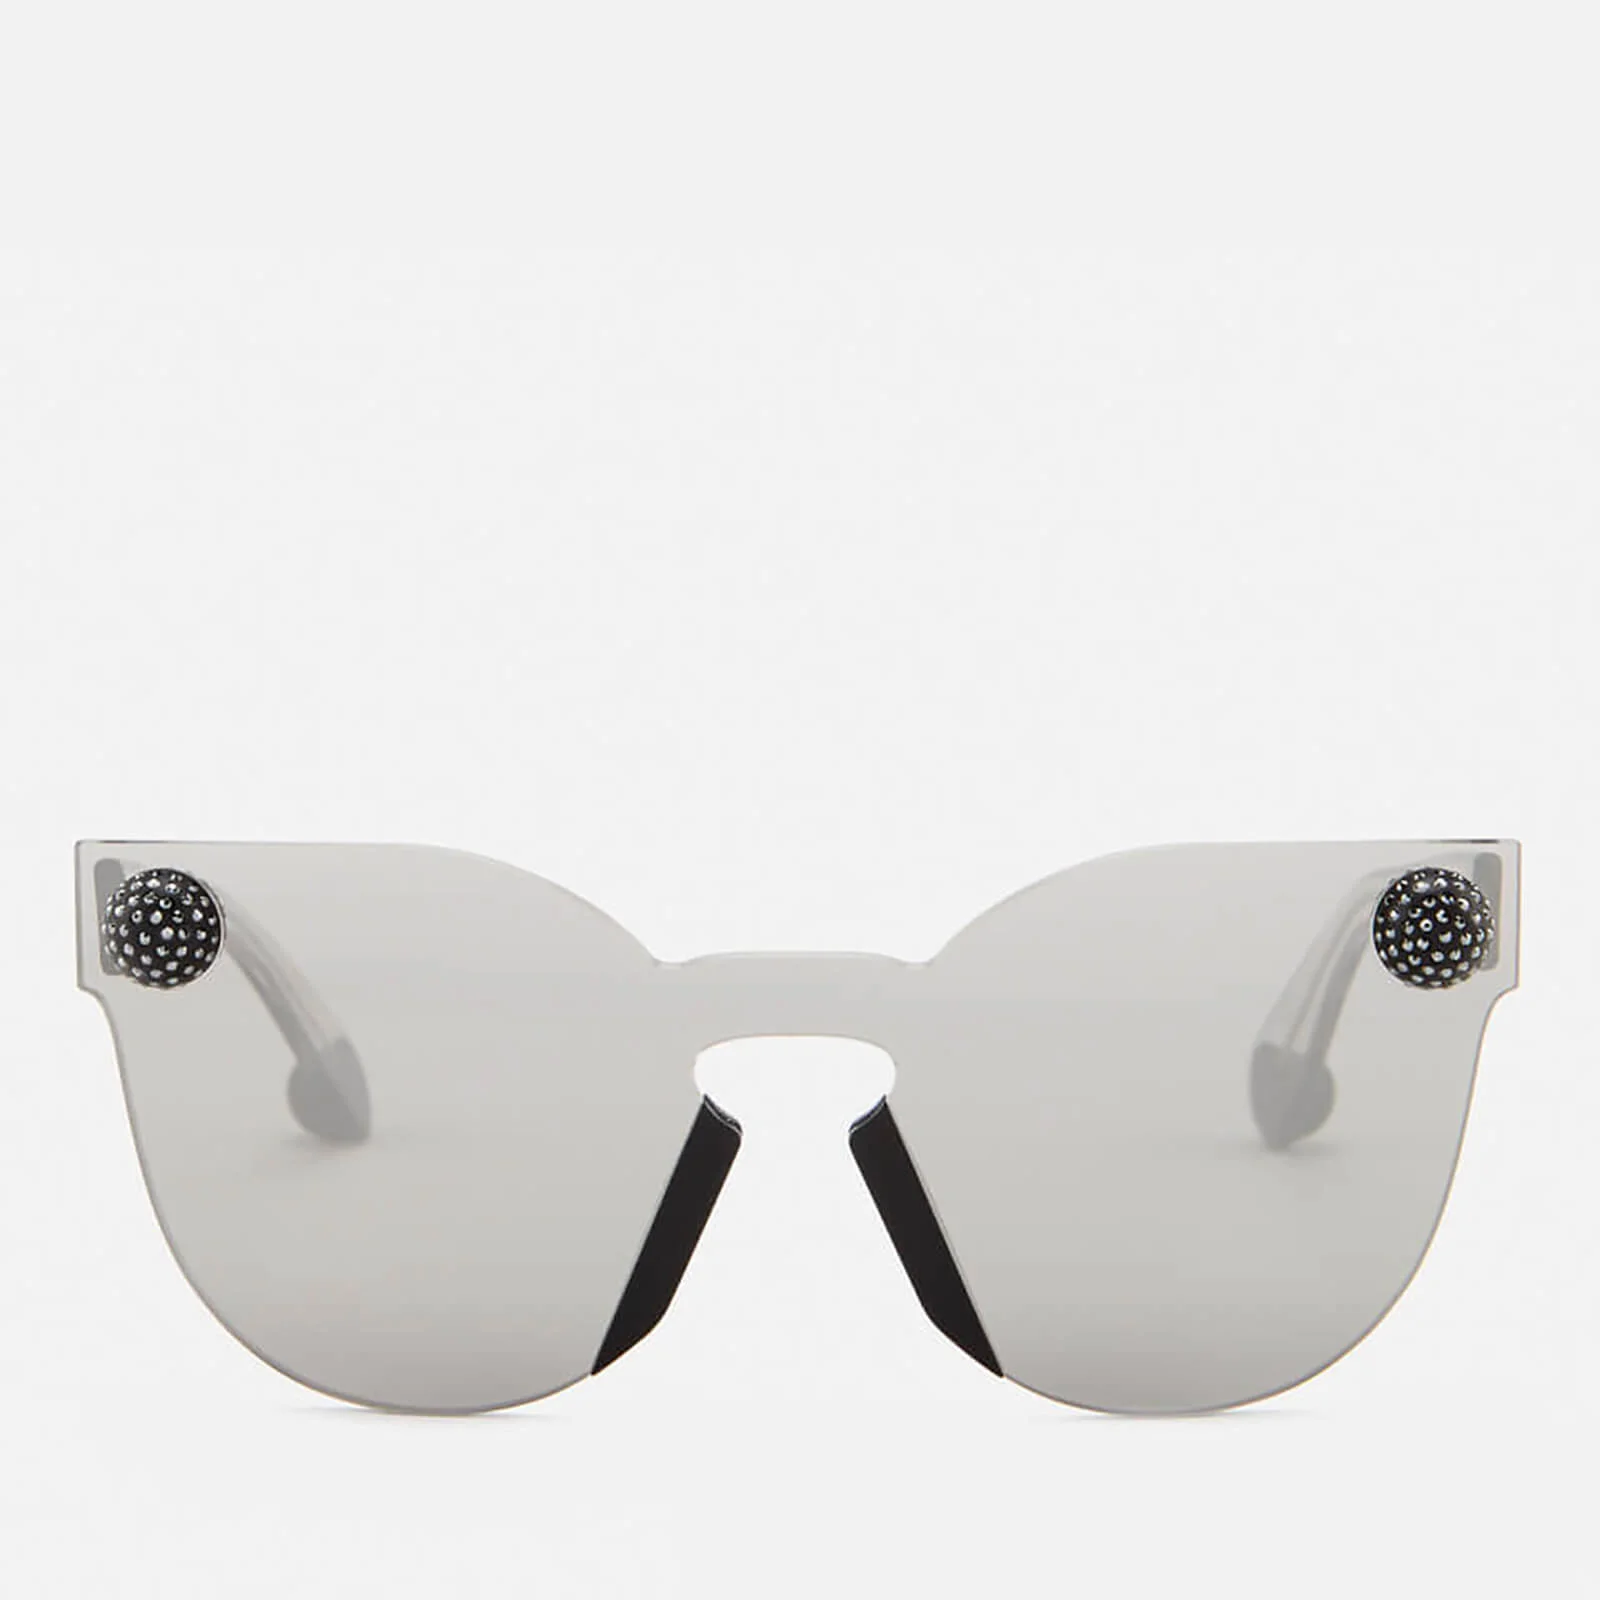 Christopher Kane Women's Cat Eye Sunglasses - Silver/Grey Image 1